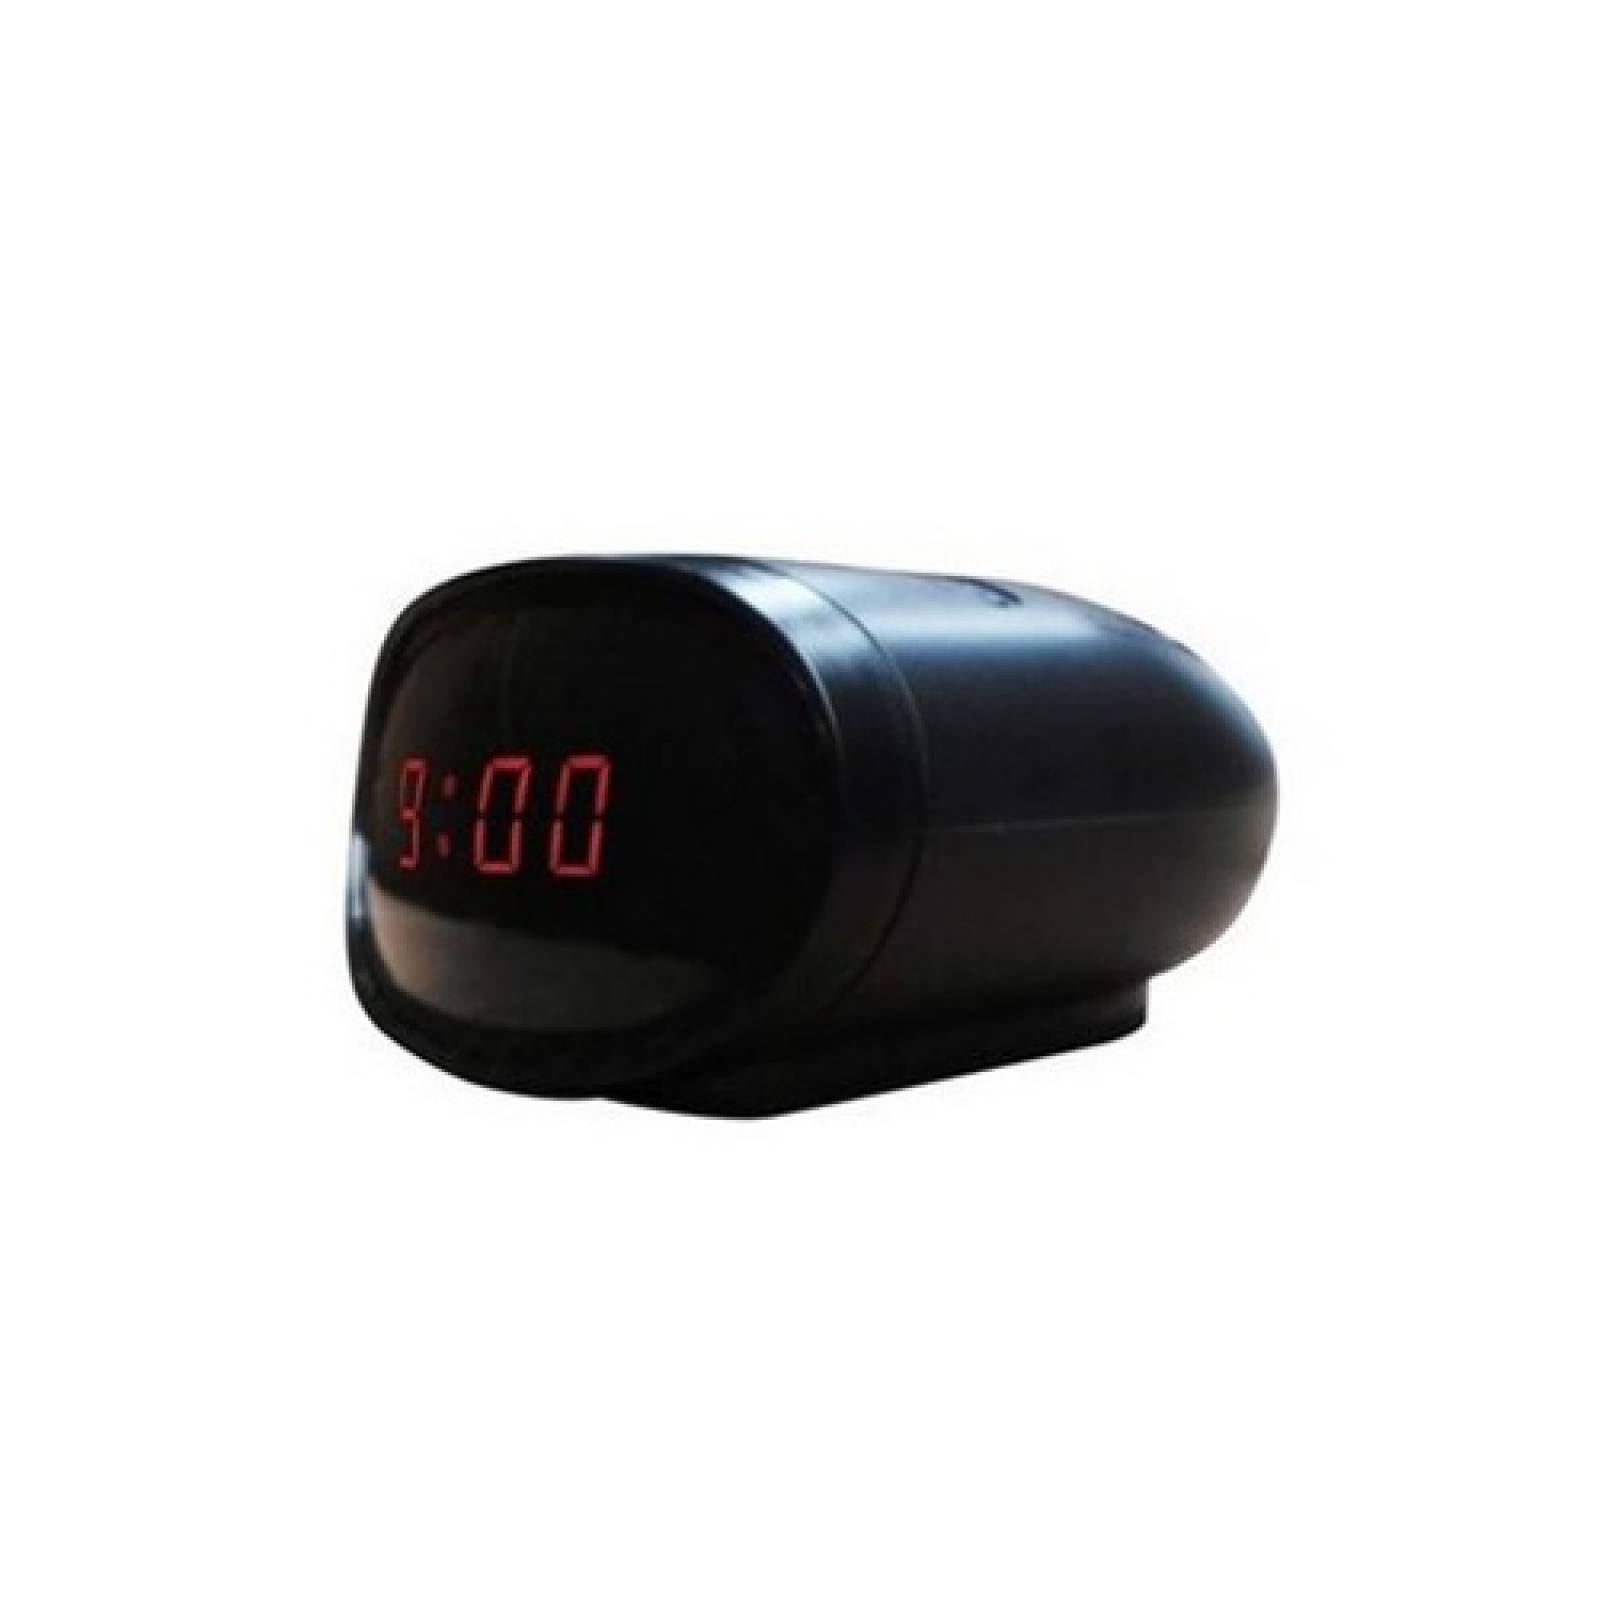 Radio Reloj Despertador RCA Snooze Timer Reacondicionado